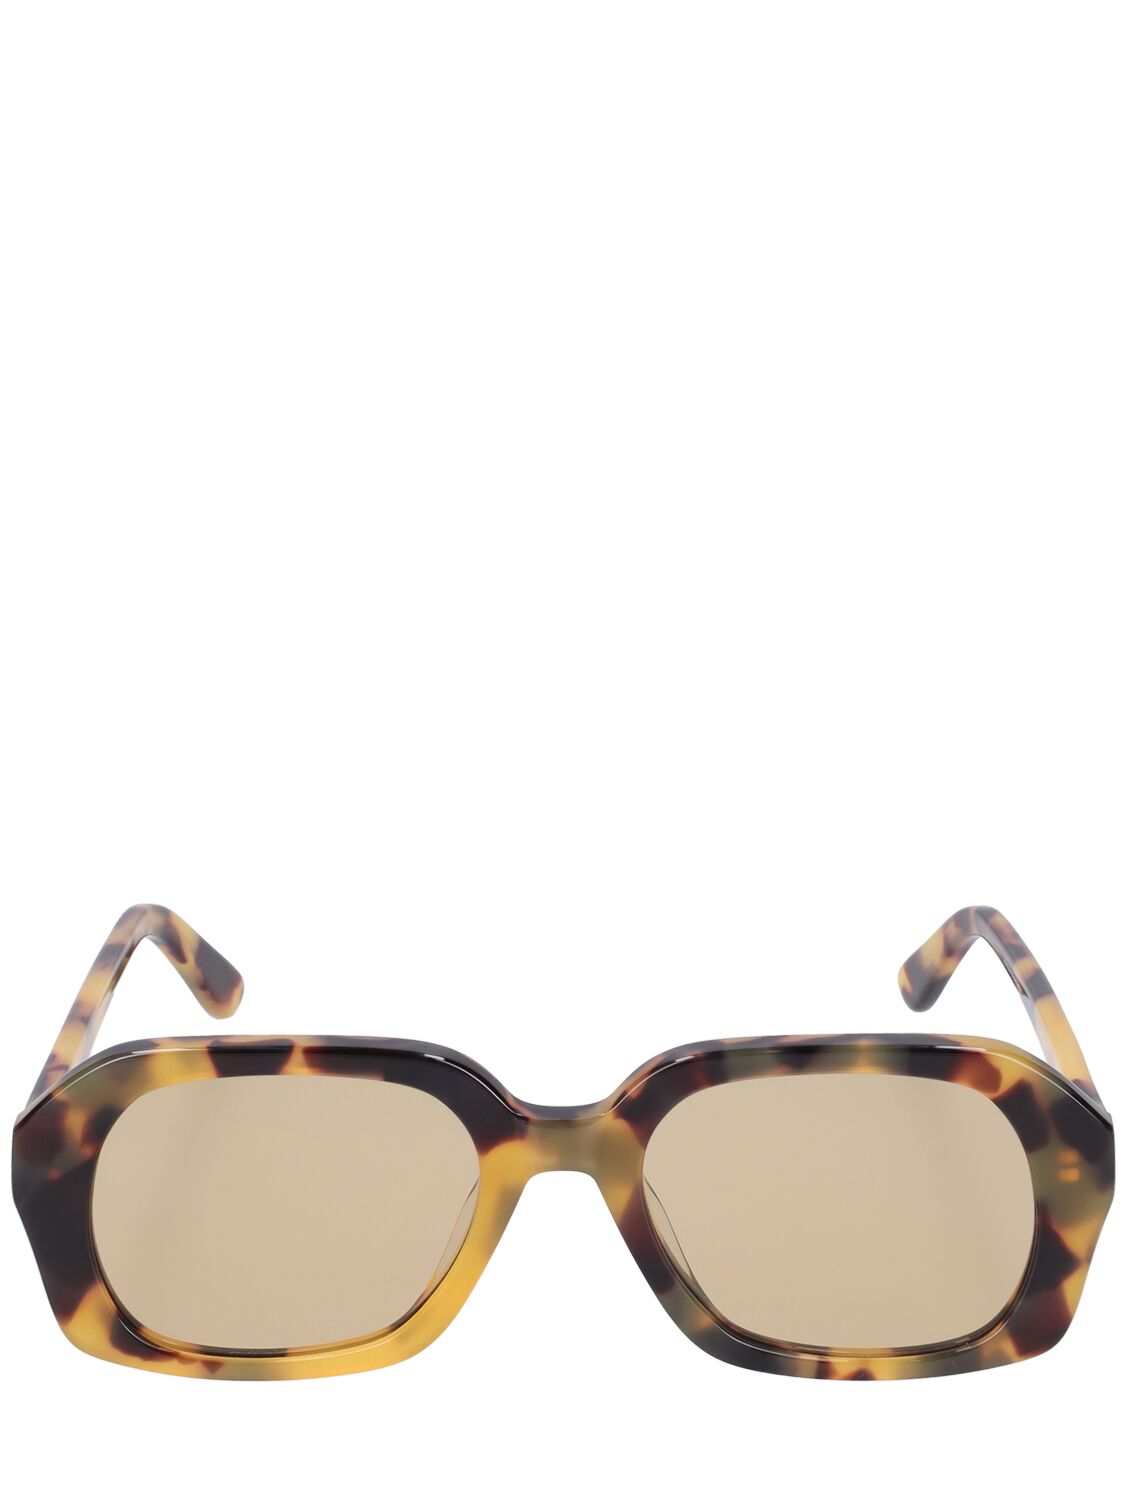 Image of Le Classique Acetate Sunglasses